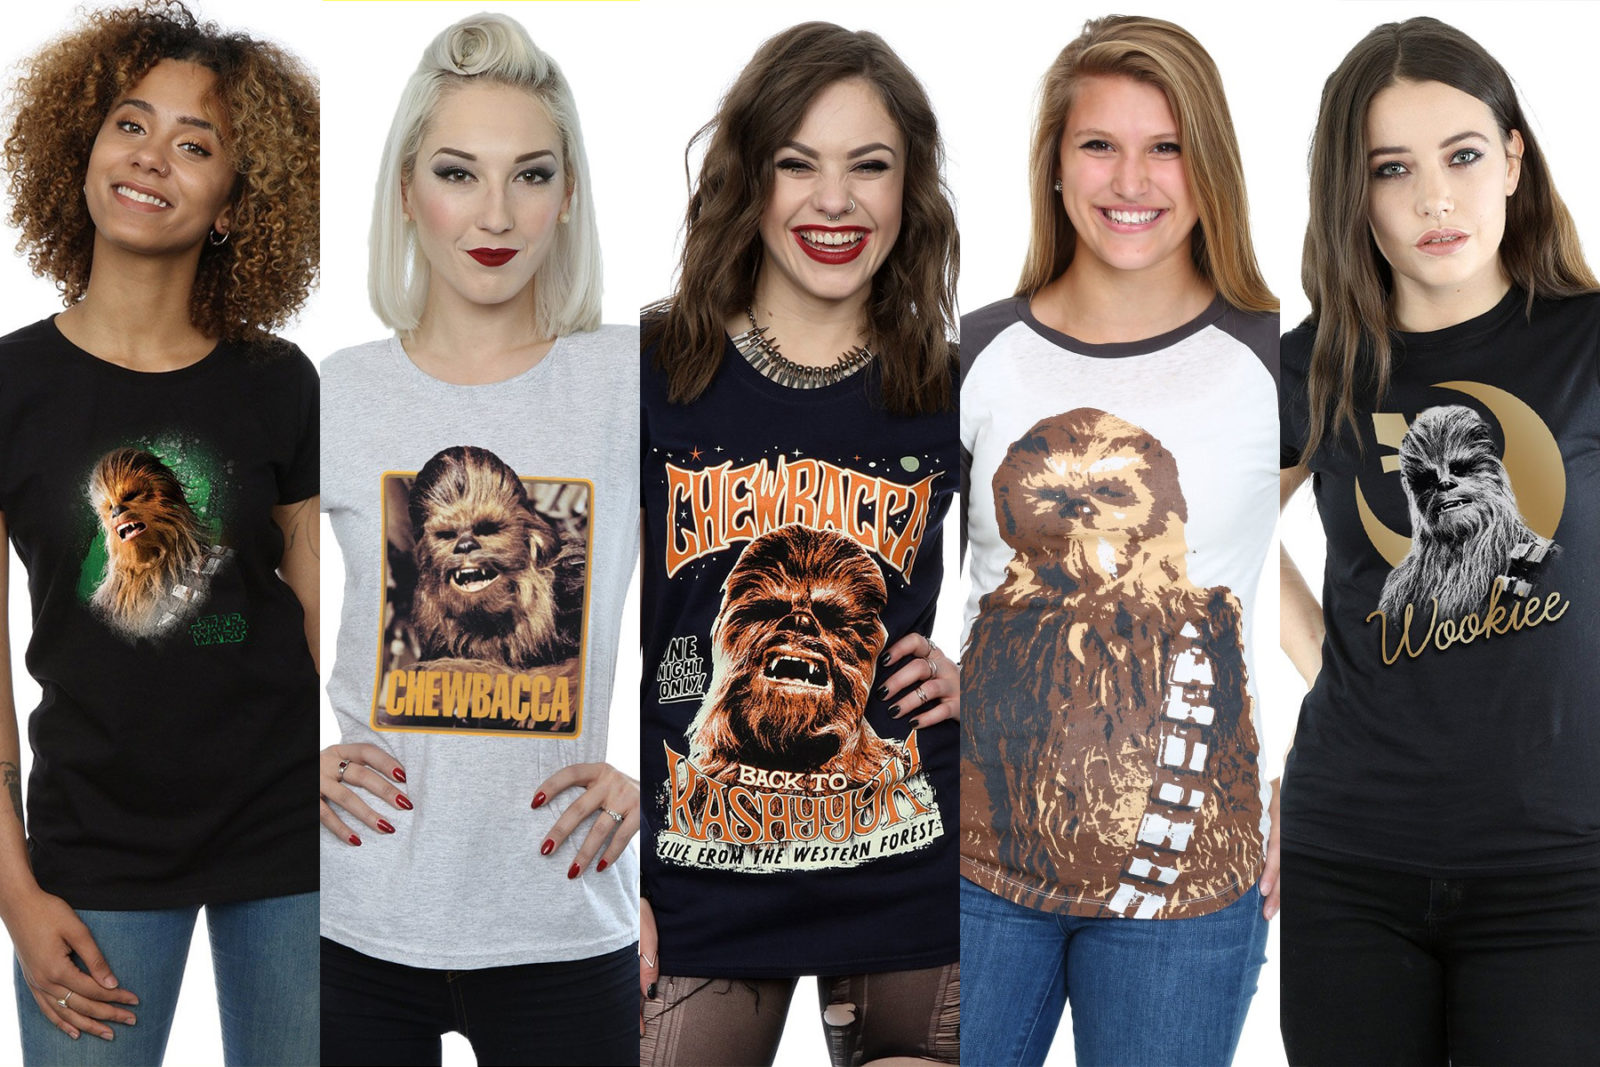 Leia's List - women's Star Wars Chewbacca printed tops